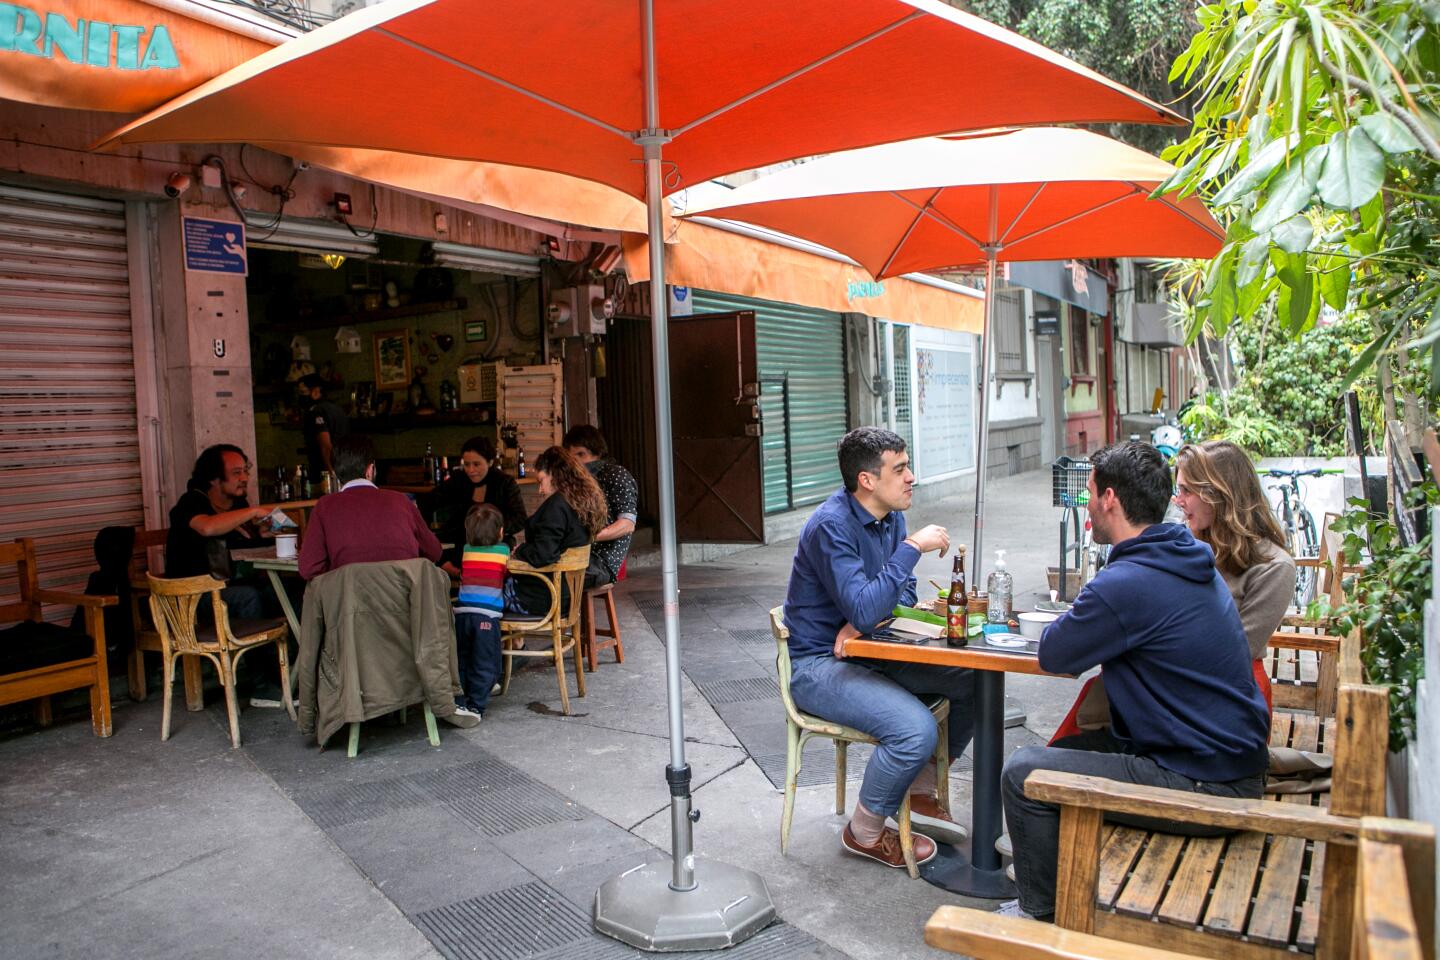 People enjoy outdoor dining at the Mexico City restaurant El Parnita.